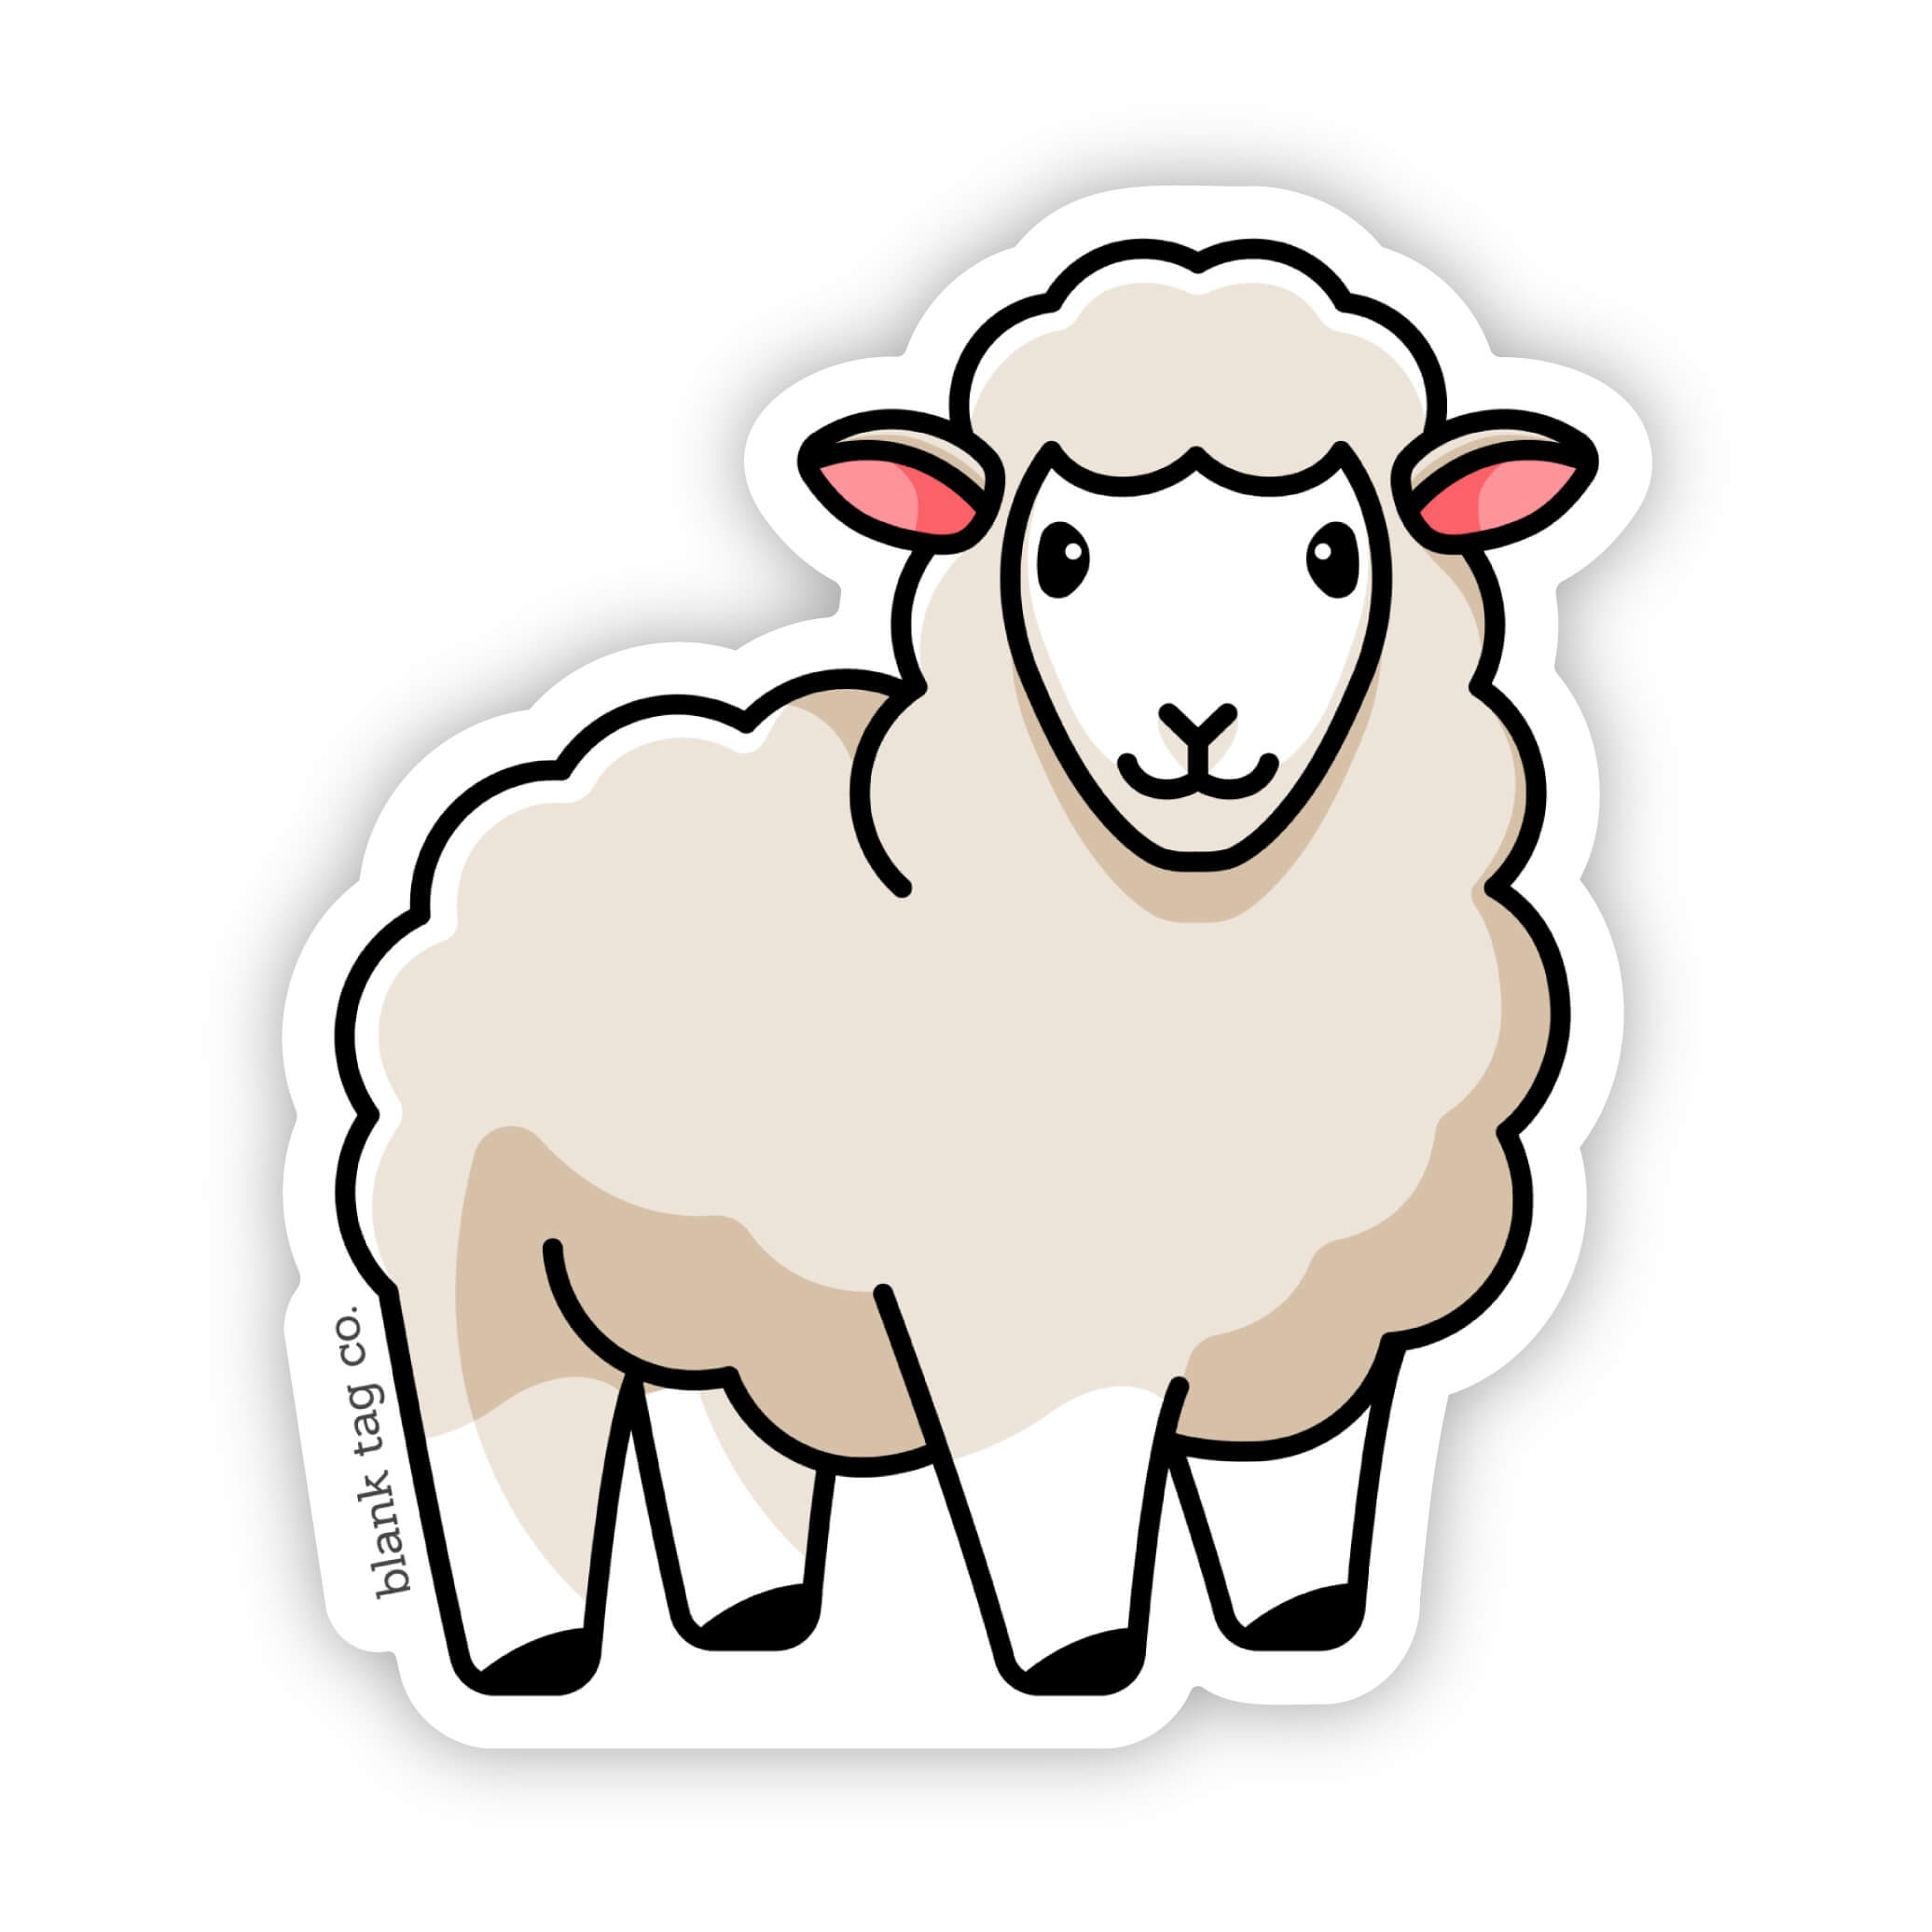 The Sheep Sticker